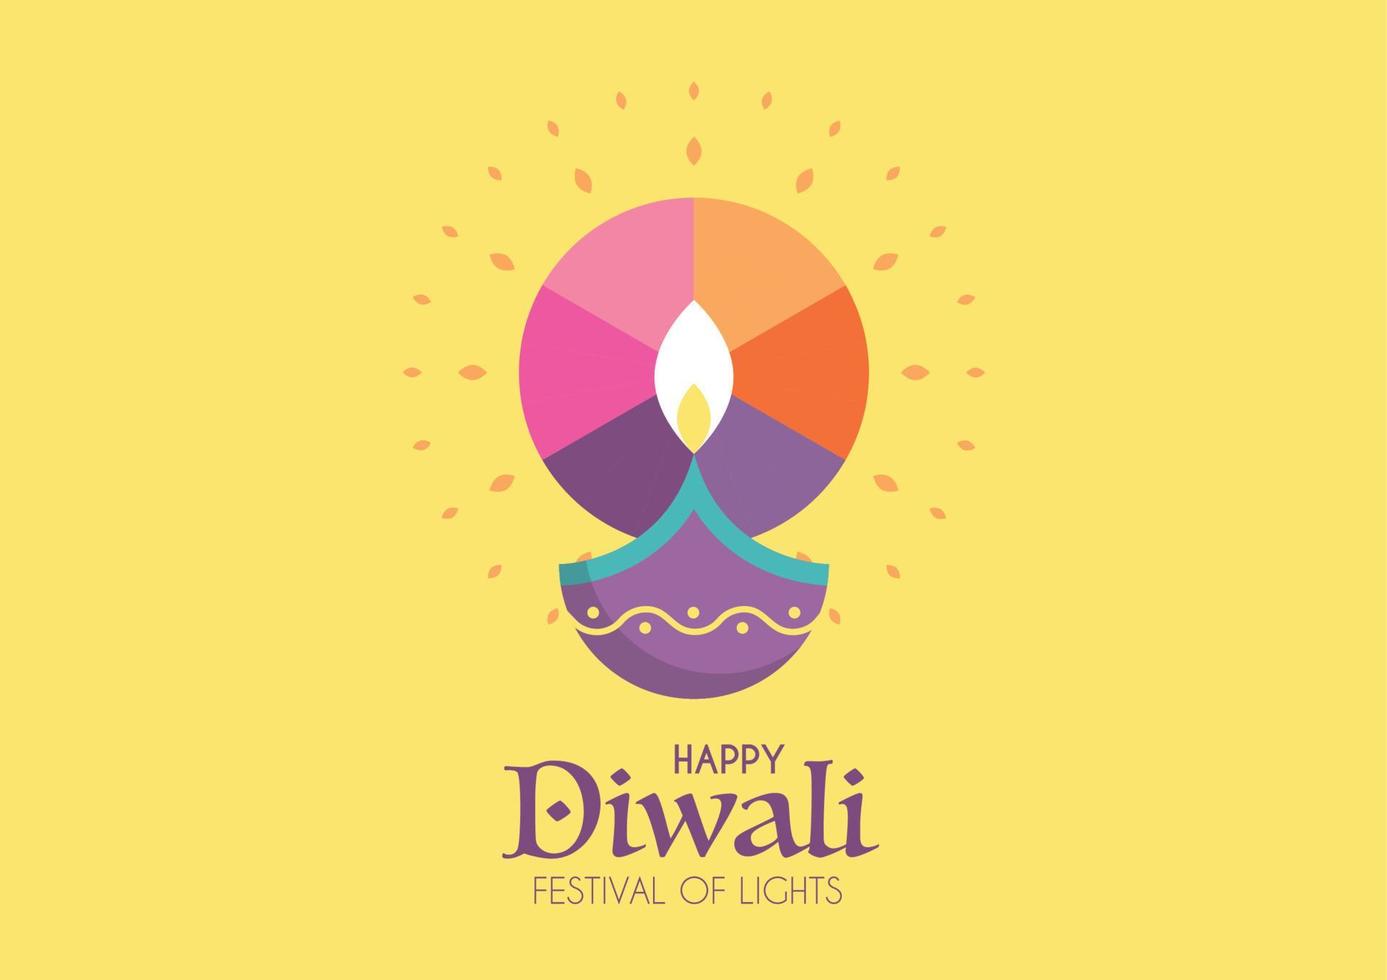 Diwali Hindu festival posters vector